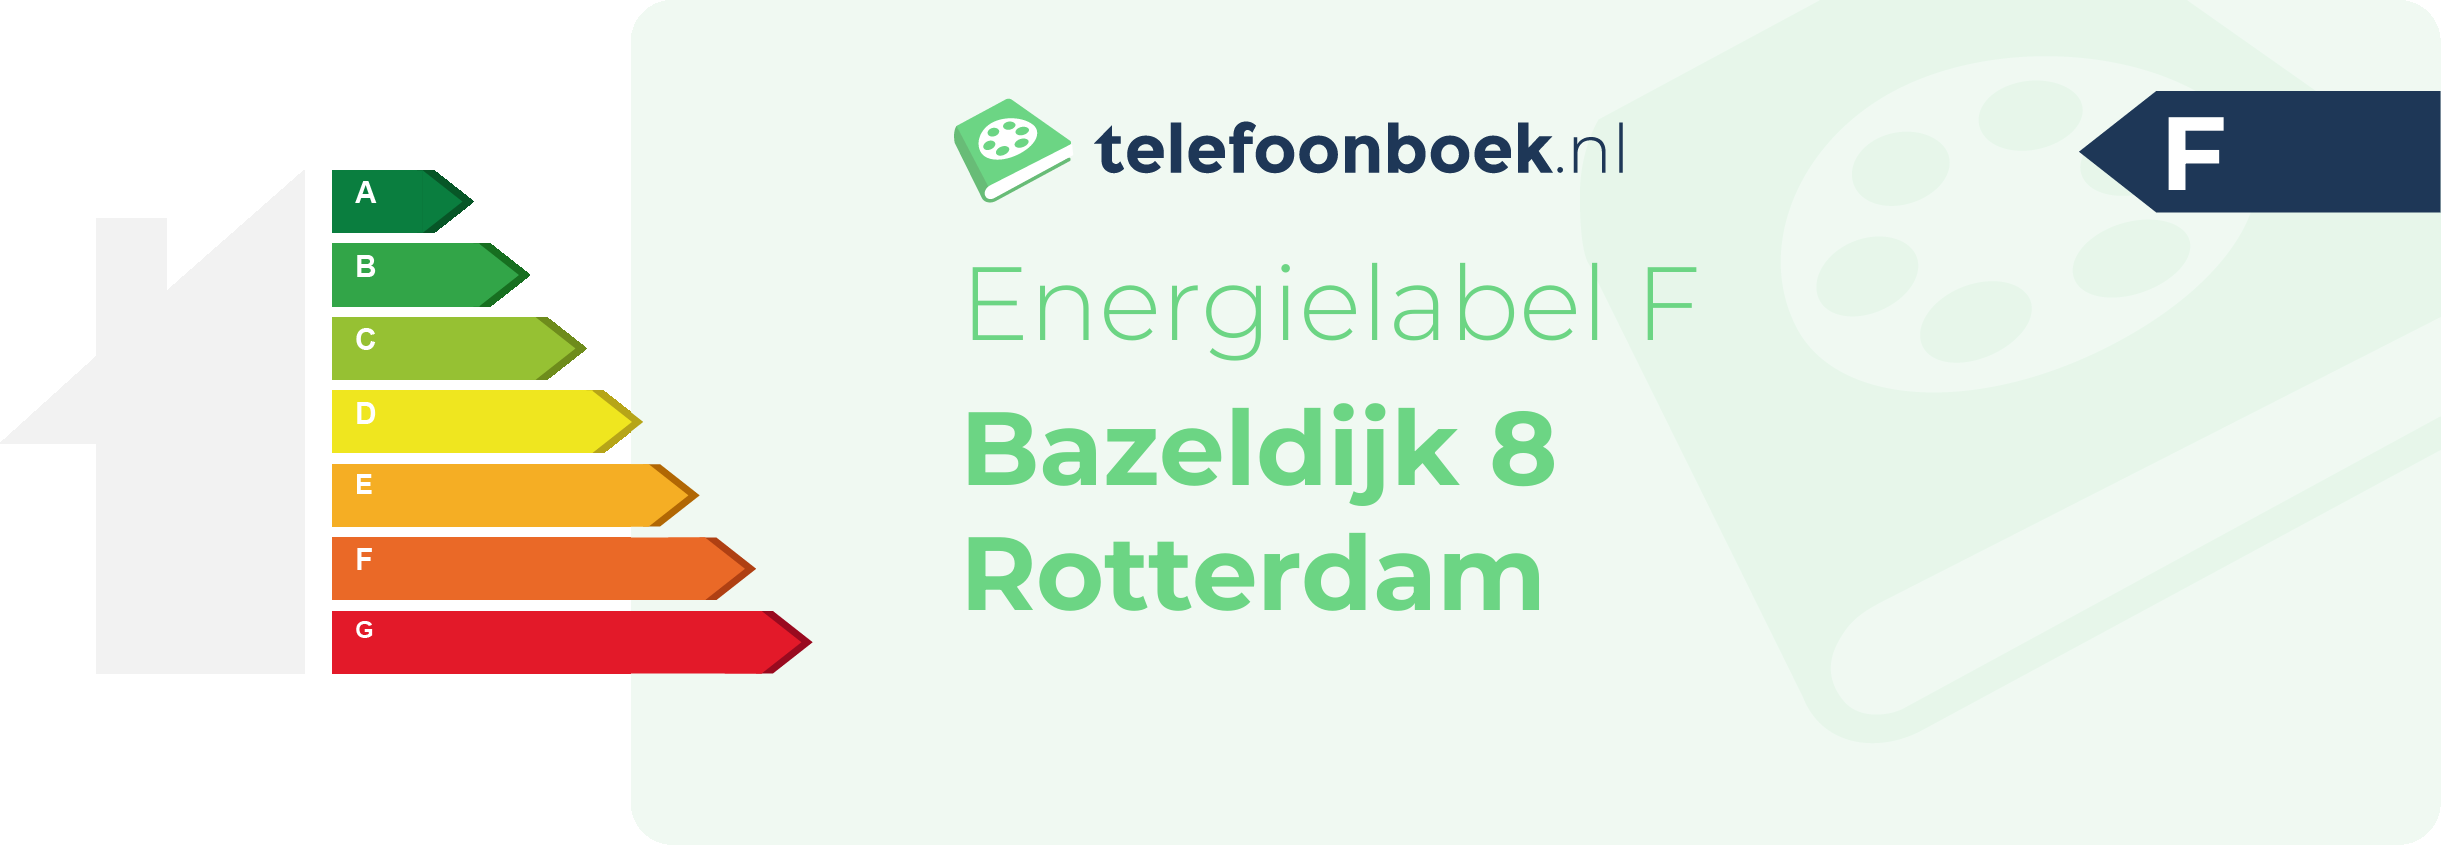 Energielabel Bazeldijk 8 Rotterdam